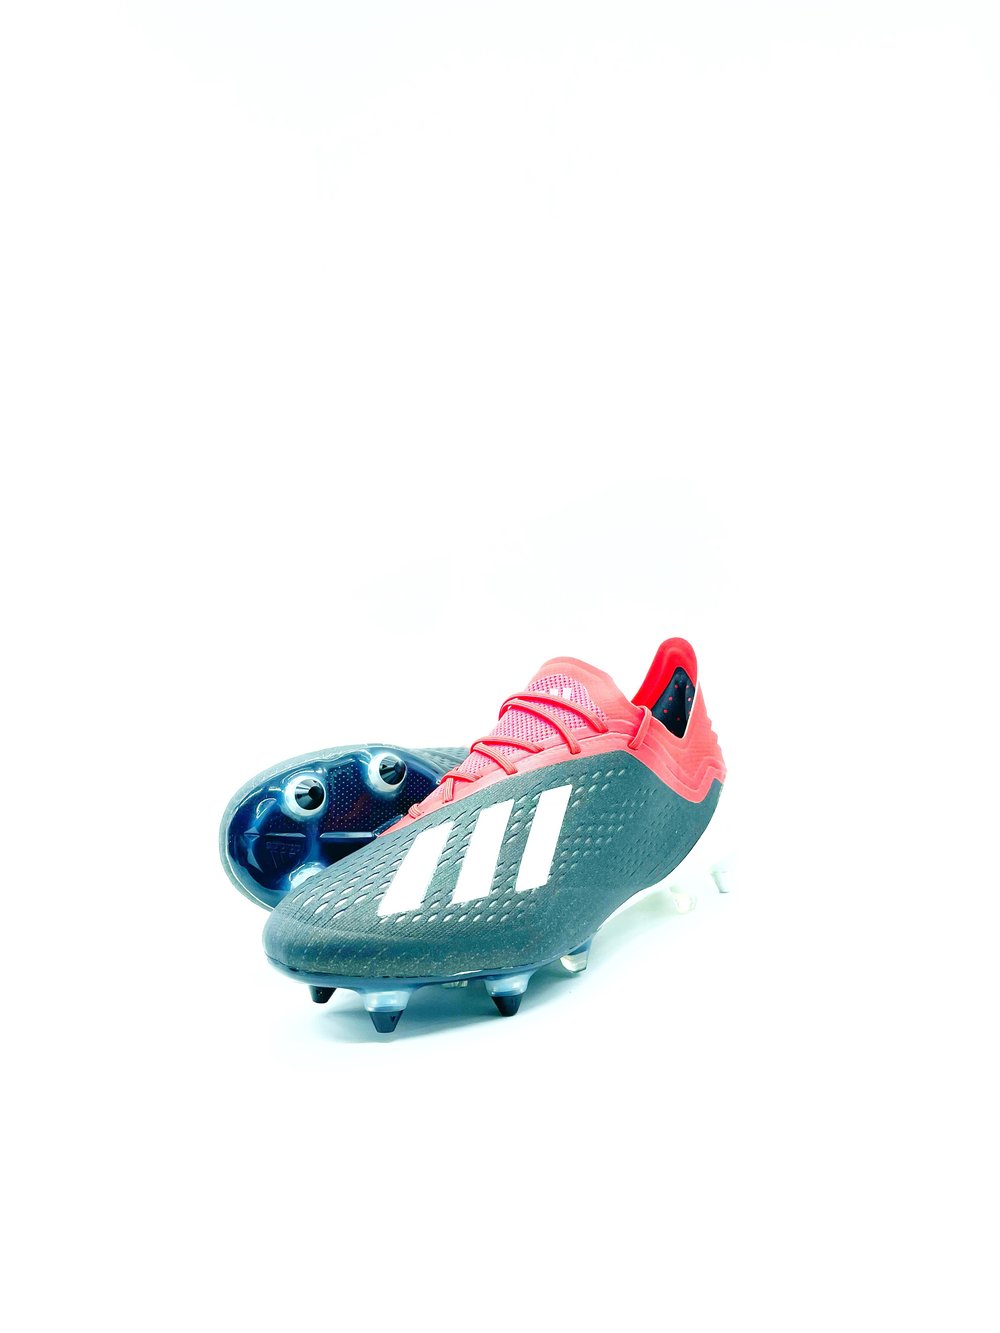 Image of Adidas 18.1 SG BLACK RED